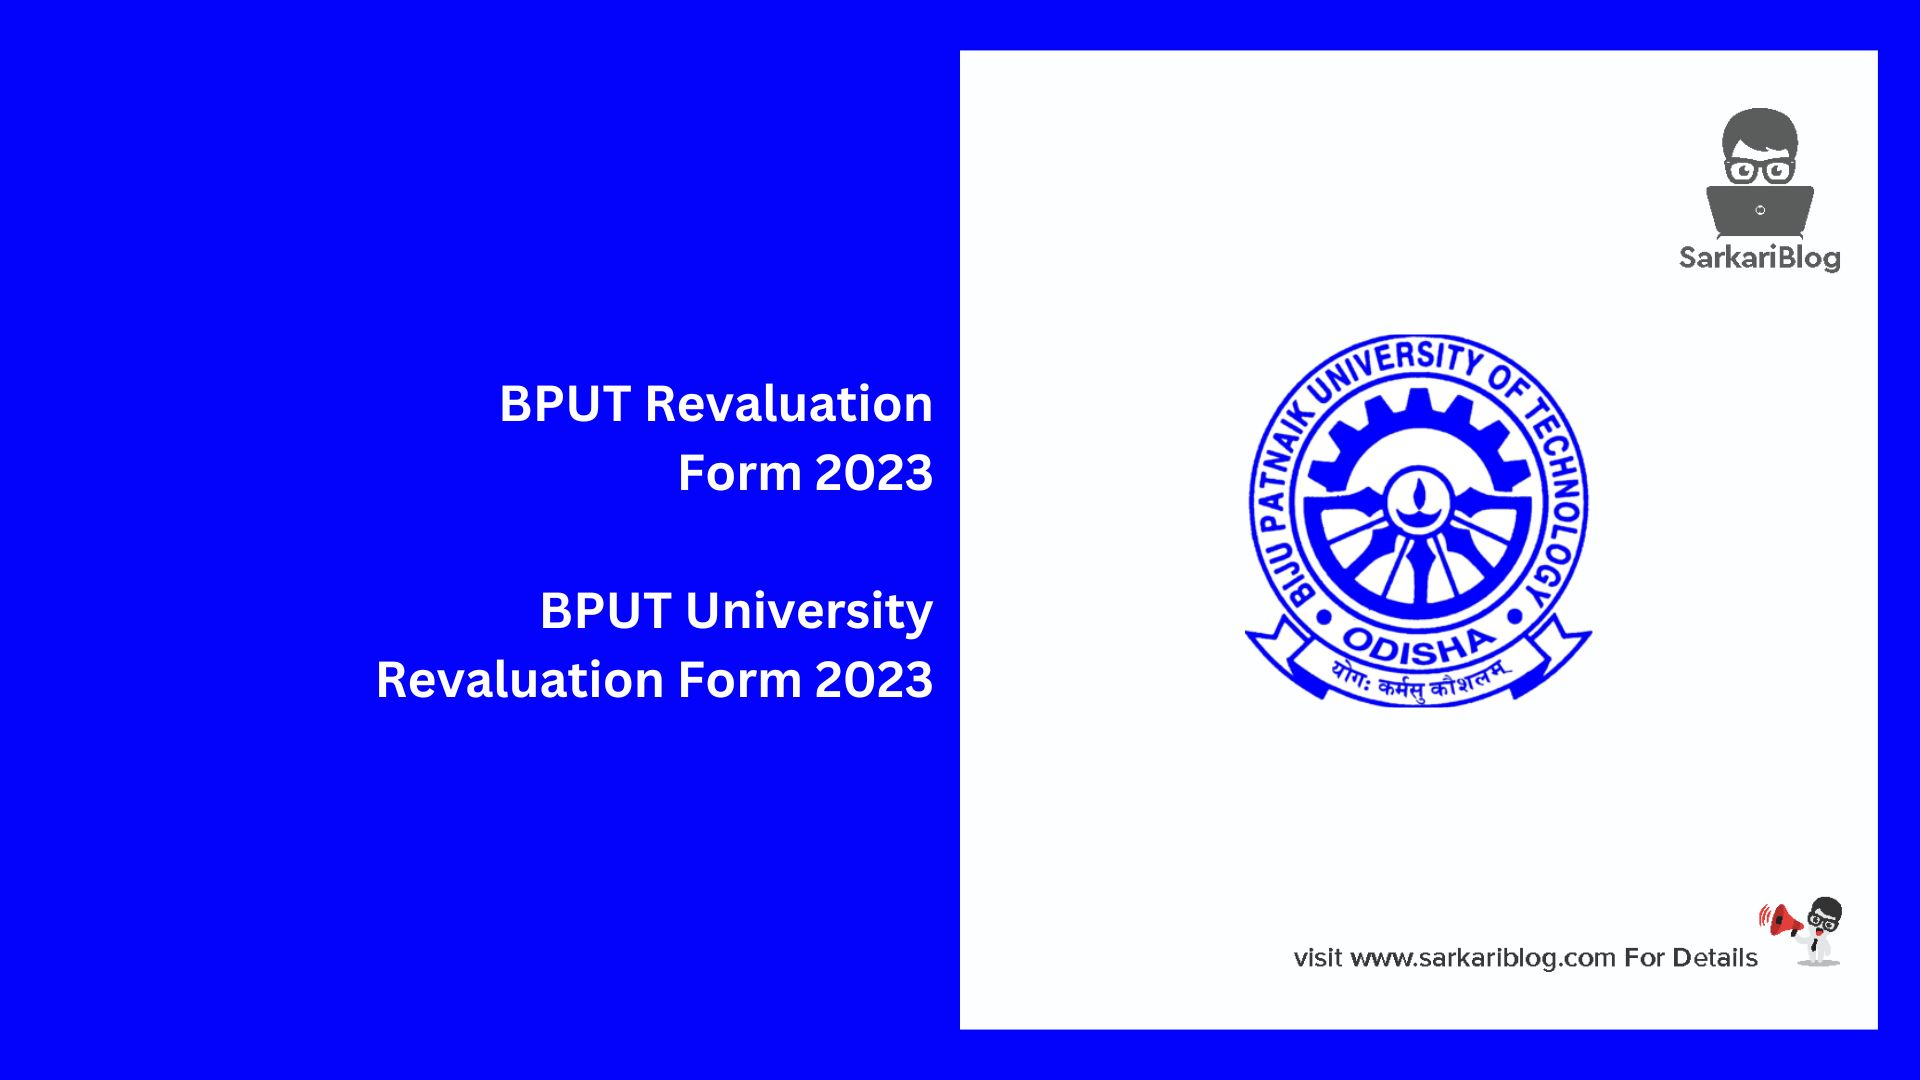 BPUT Revaluation Form 2023